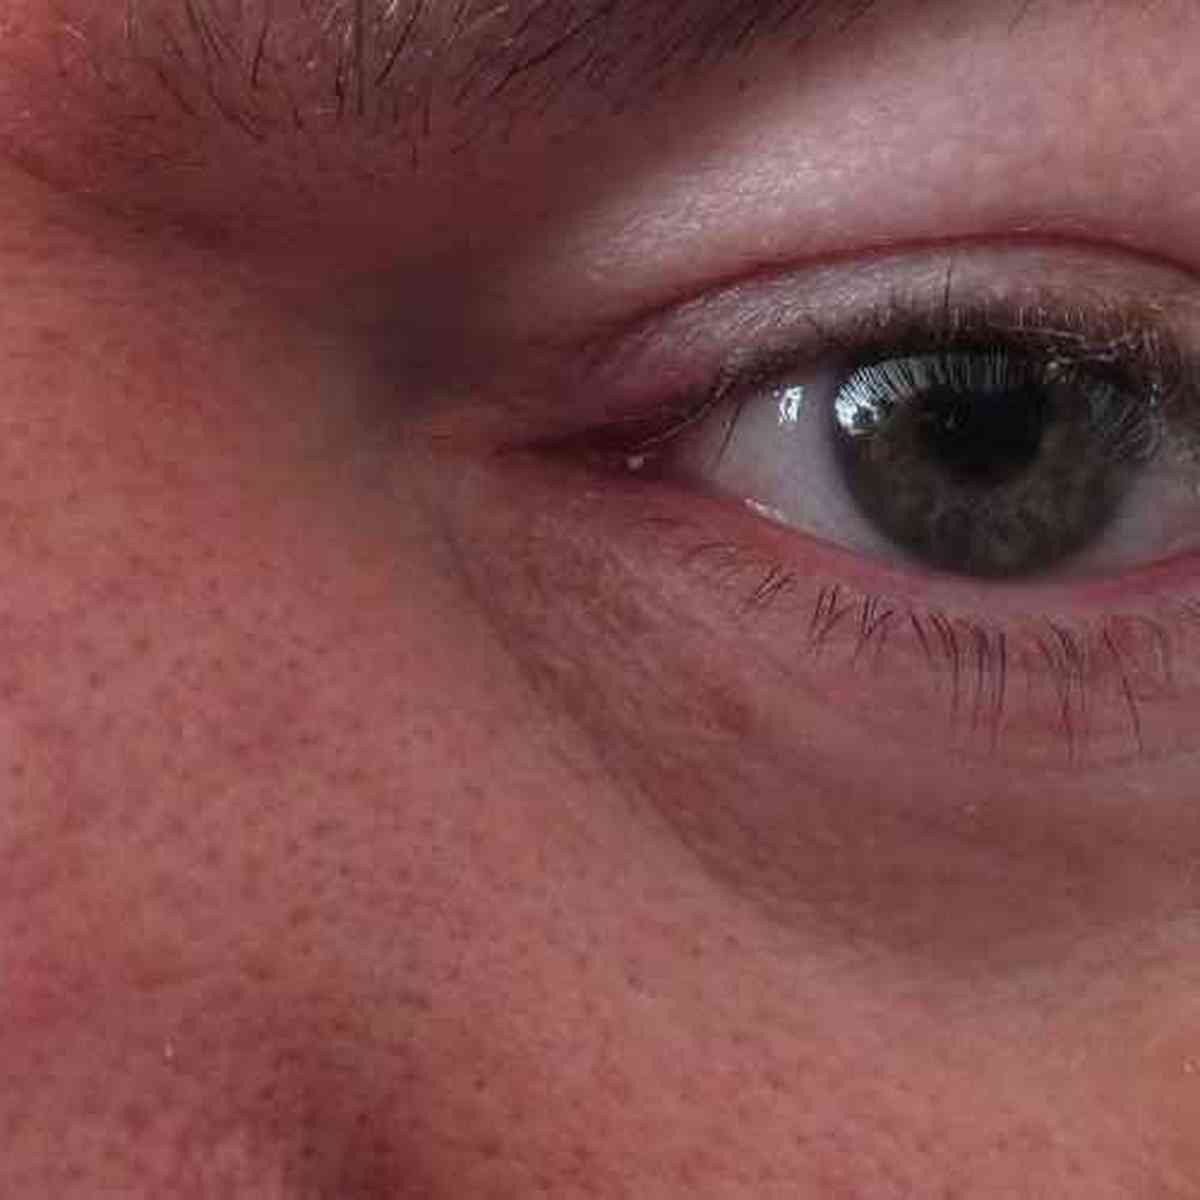 Olhos Inchados potenciais causas